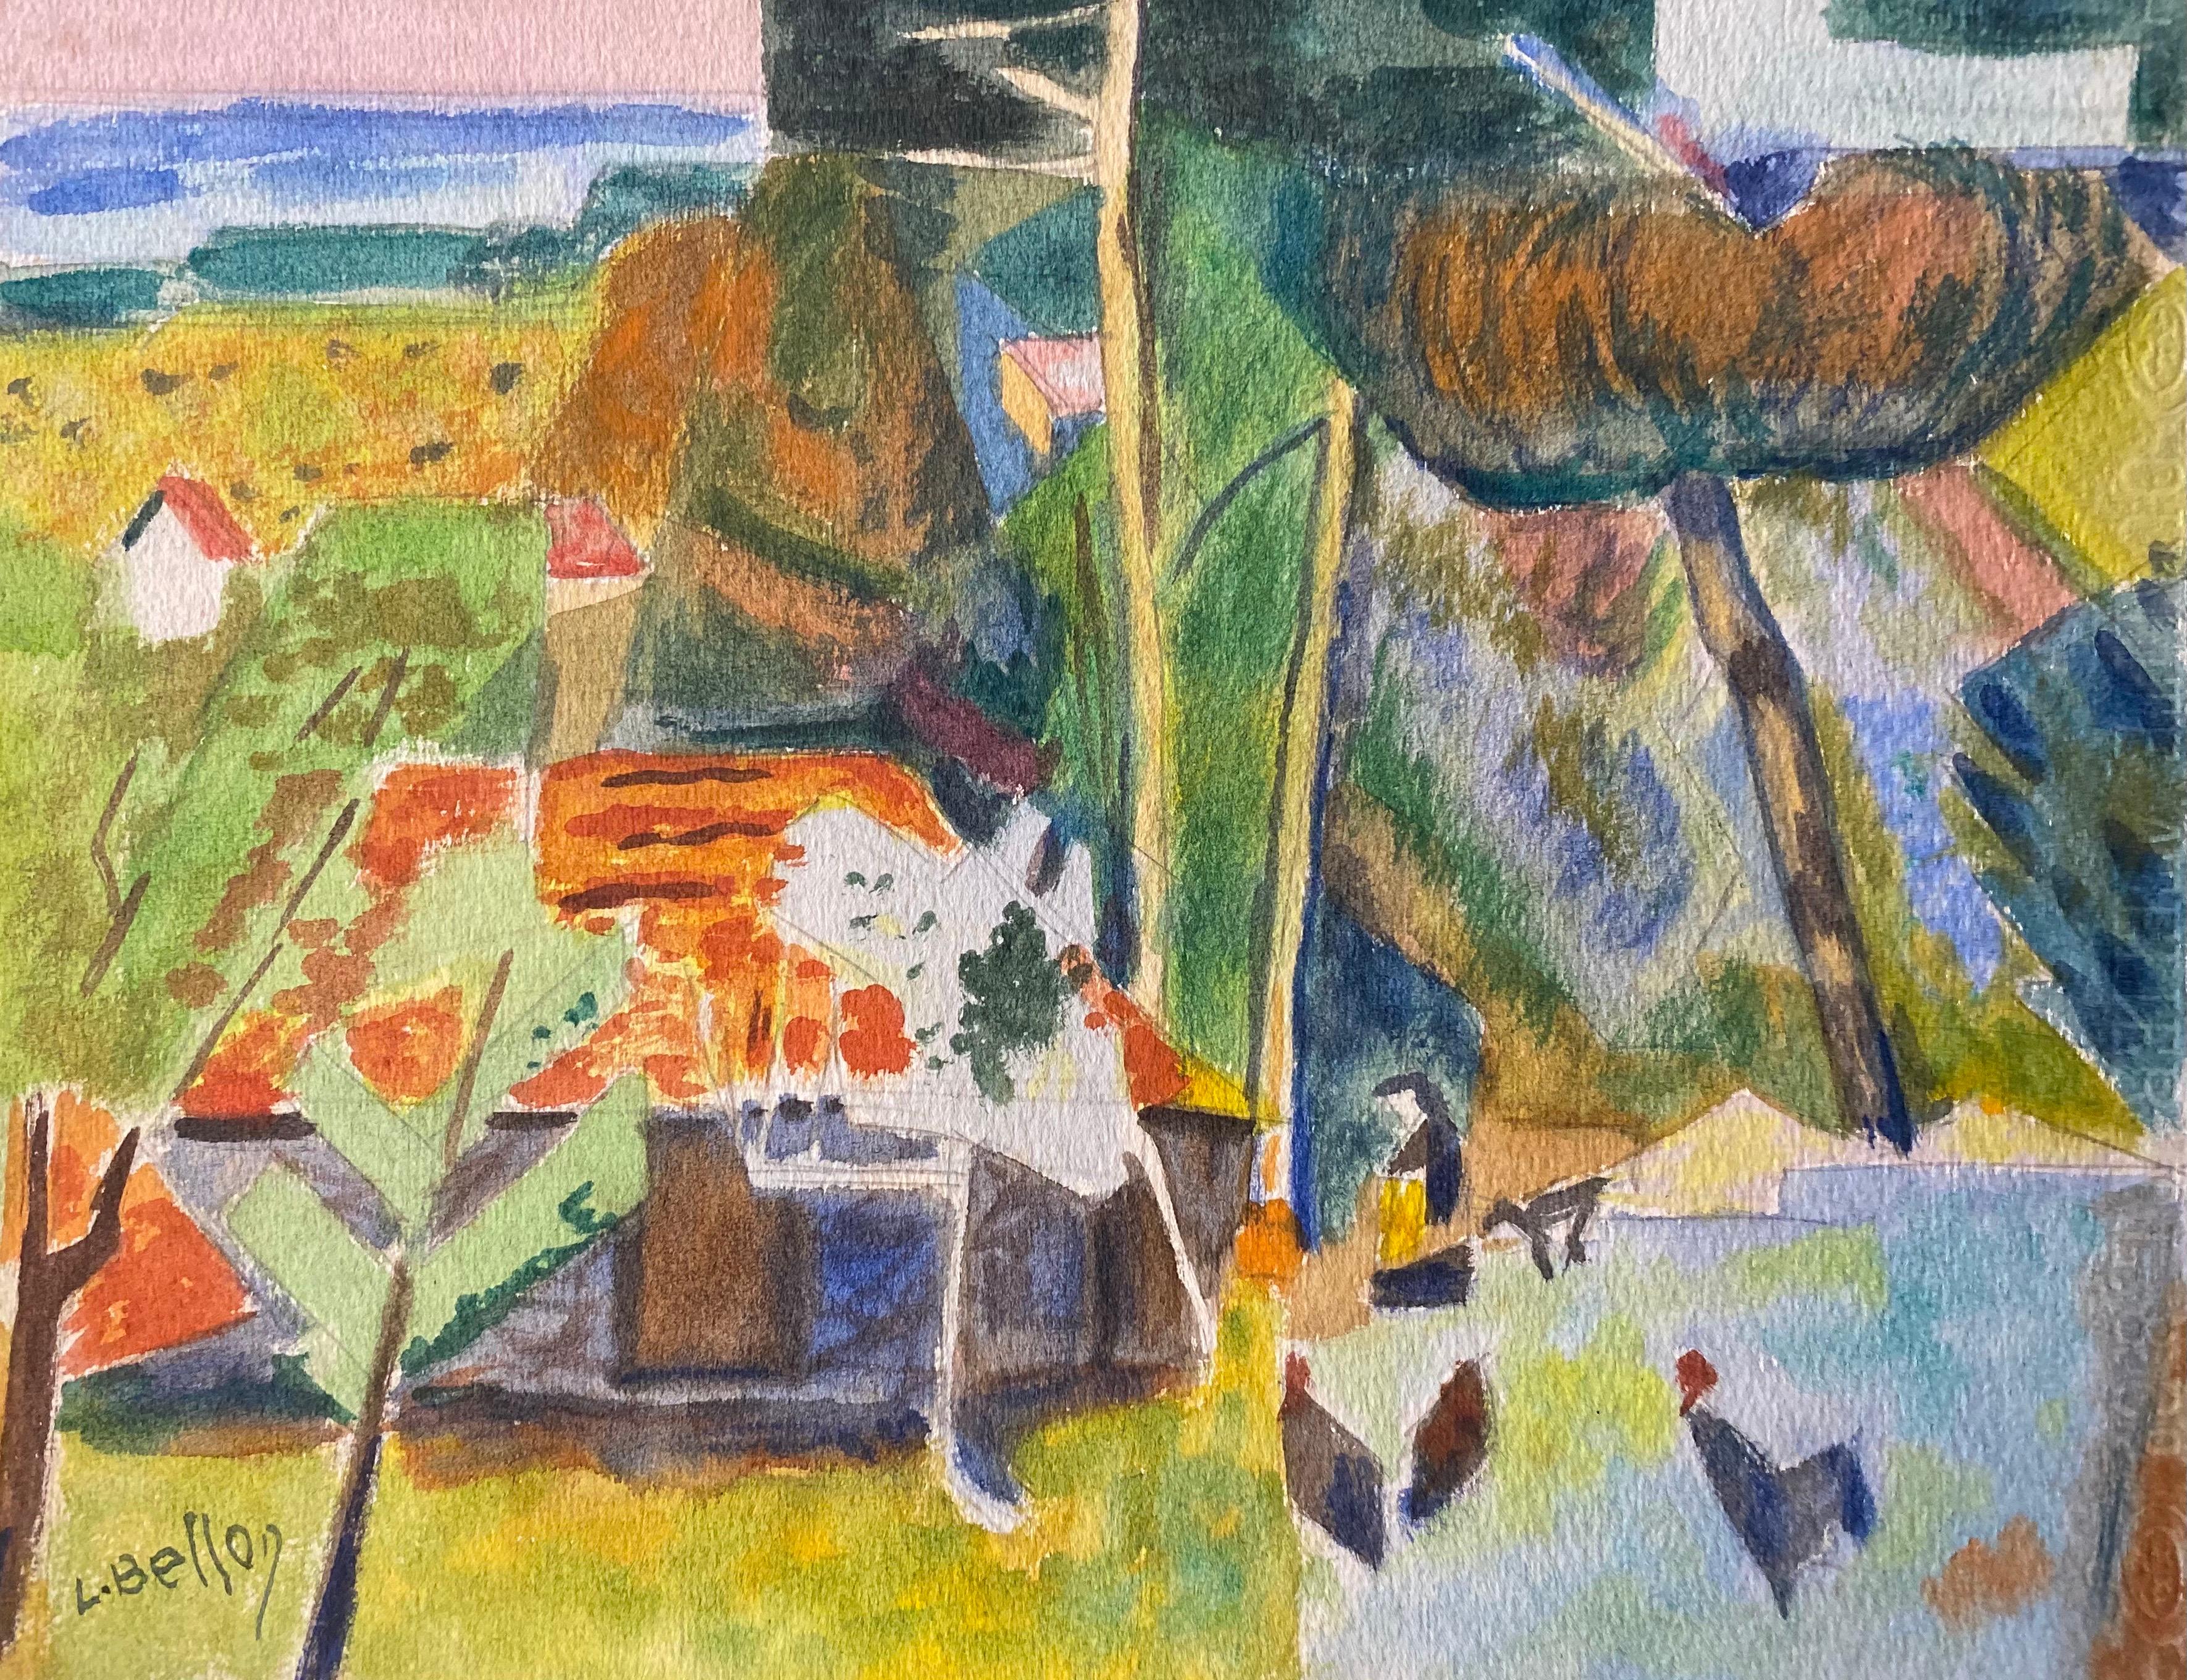 Louis Bellon Landscape Art - 1940's Provence Painting French Bright Landscape  - Post Impressionist artist